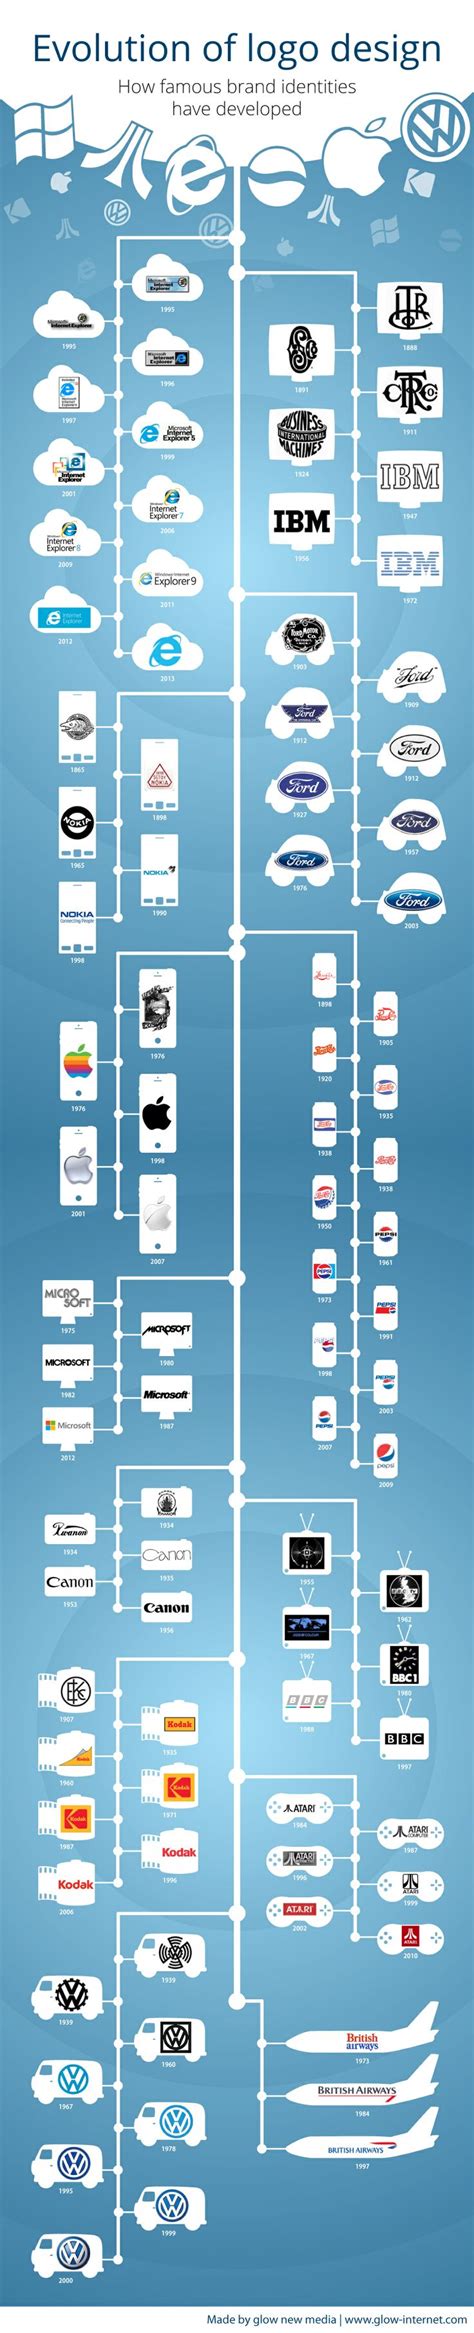 The Evolution of Famous Company Logos - #Infographic via # ...